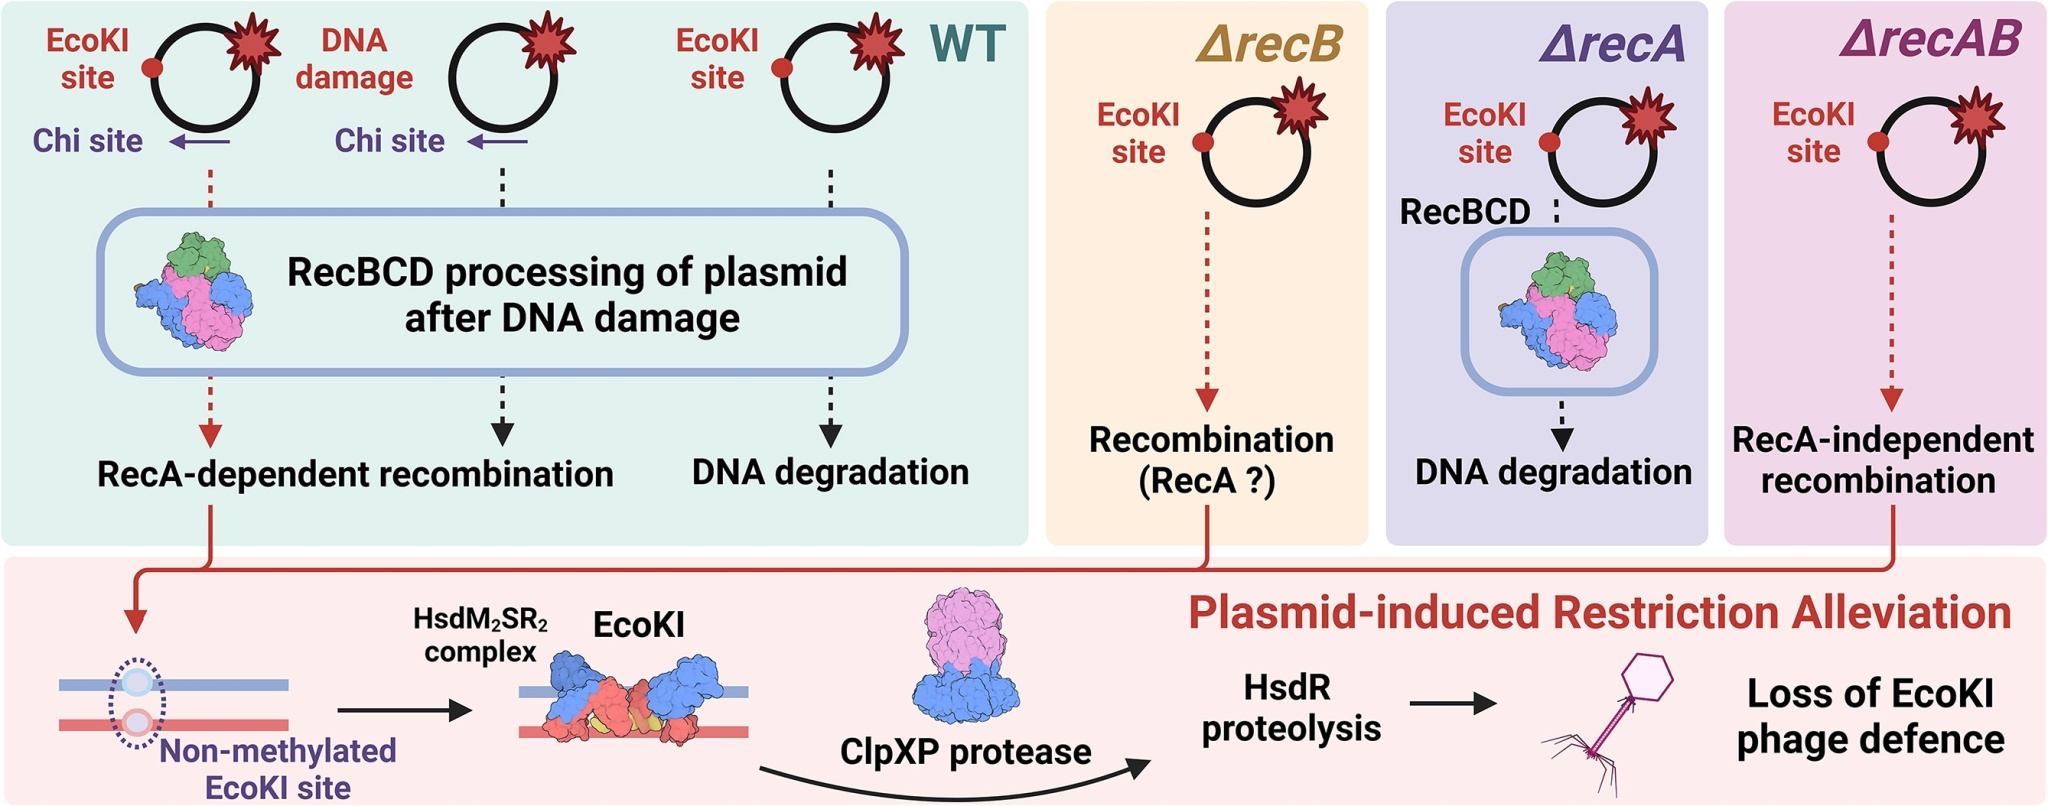  Графическая аннотация исследования. Источник: RecA-dependent or independent recombination of plasmid DNA generates a conflict with the host EcoKI immunity by launching restriction alleviation.